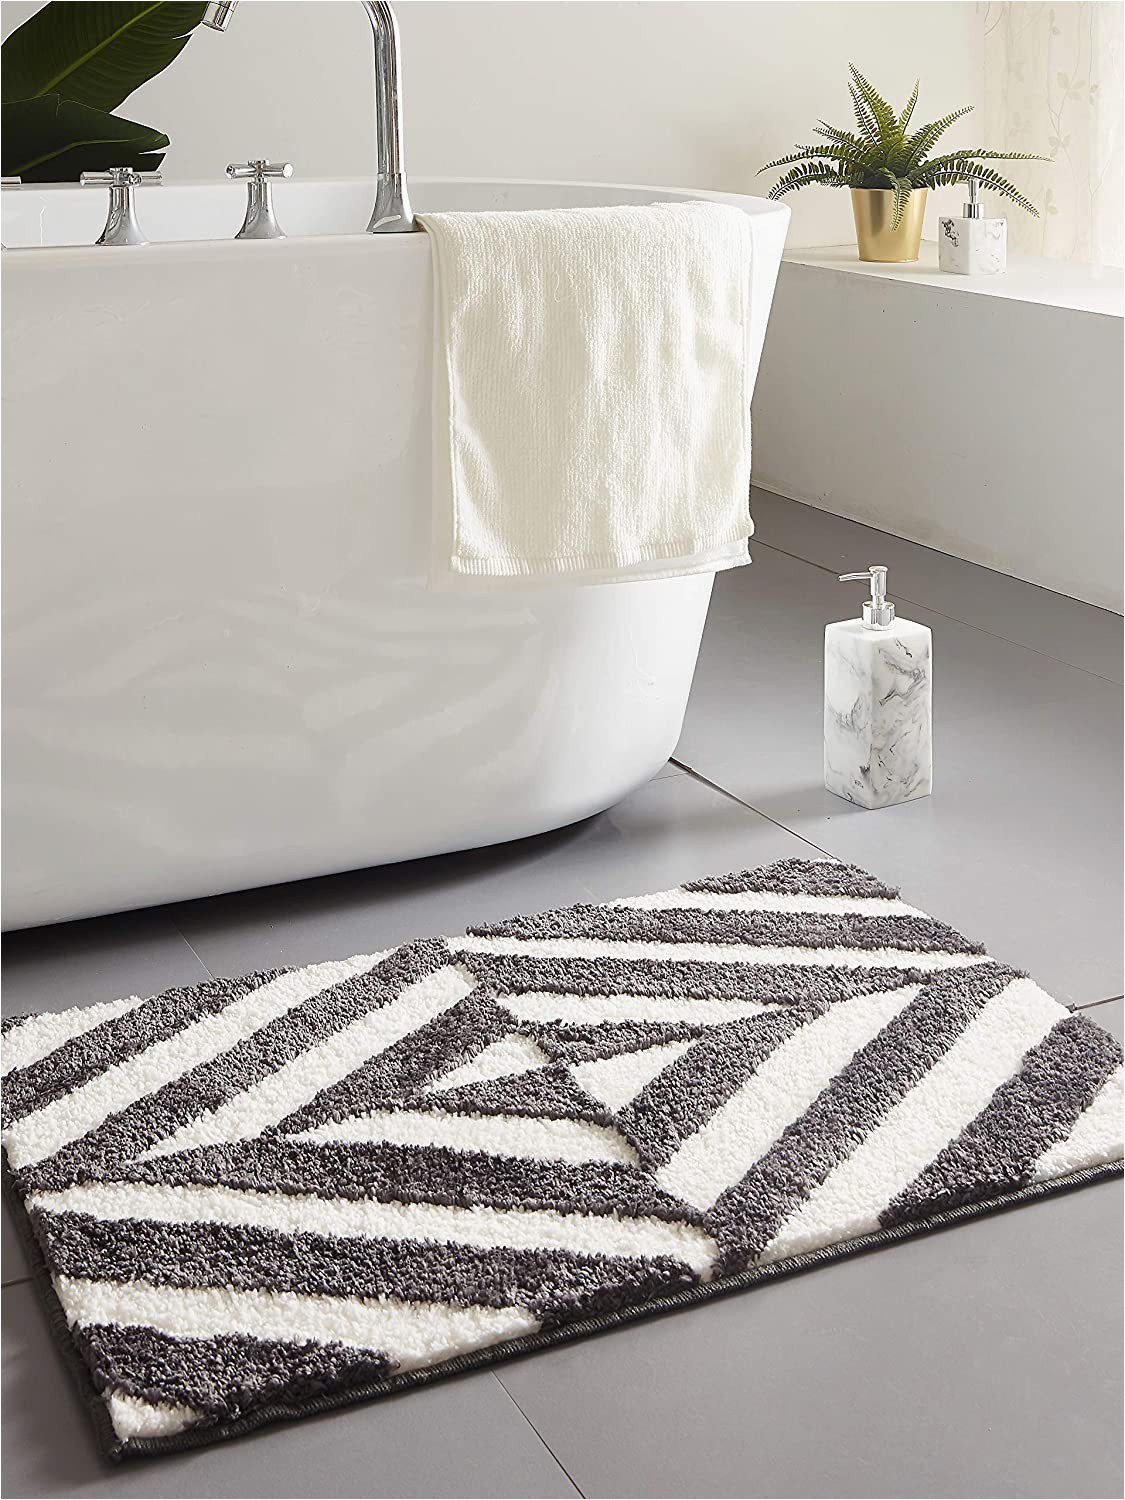 Black and White Bathroom Rug Runner Amazon Desiderare Thick Fluffy Dark Grey Bath Mat 31